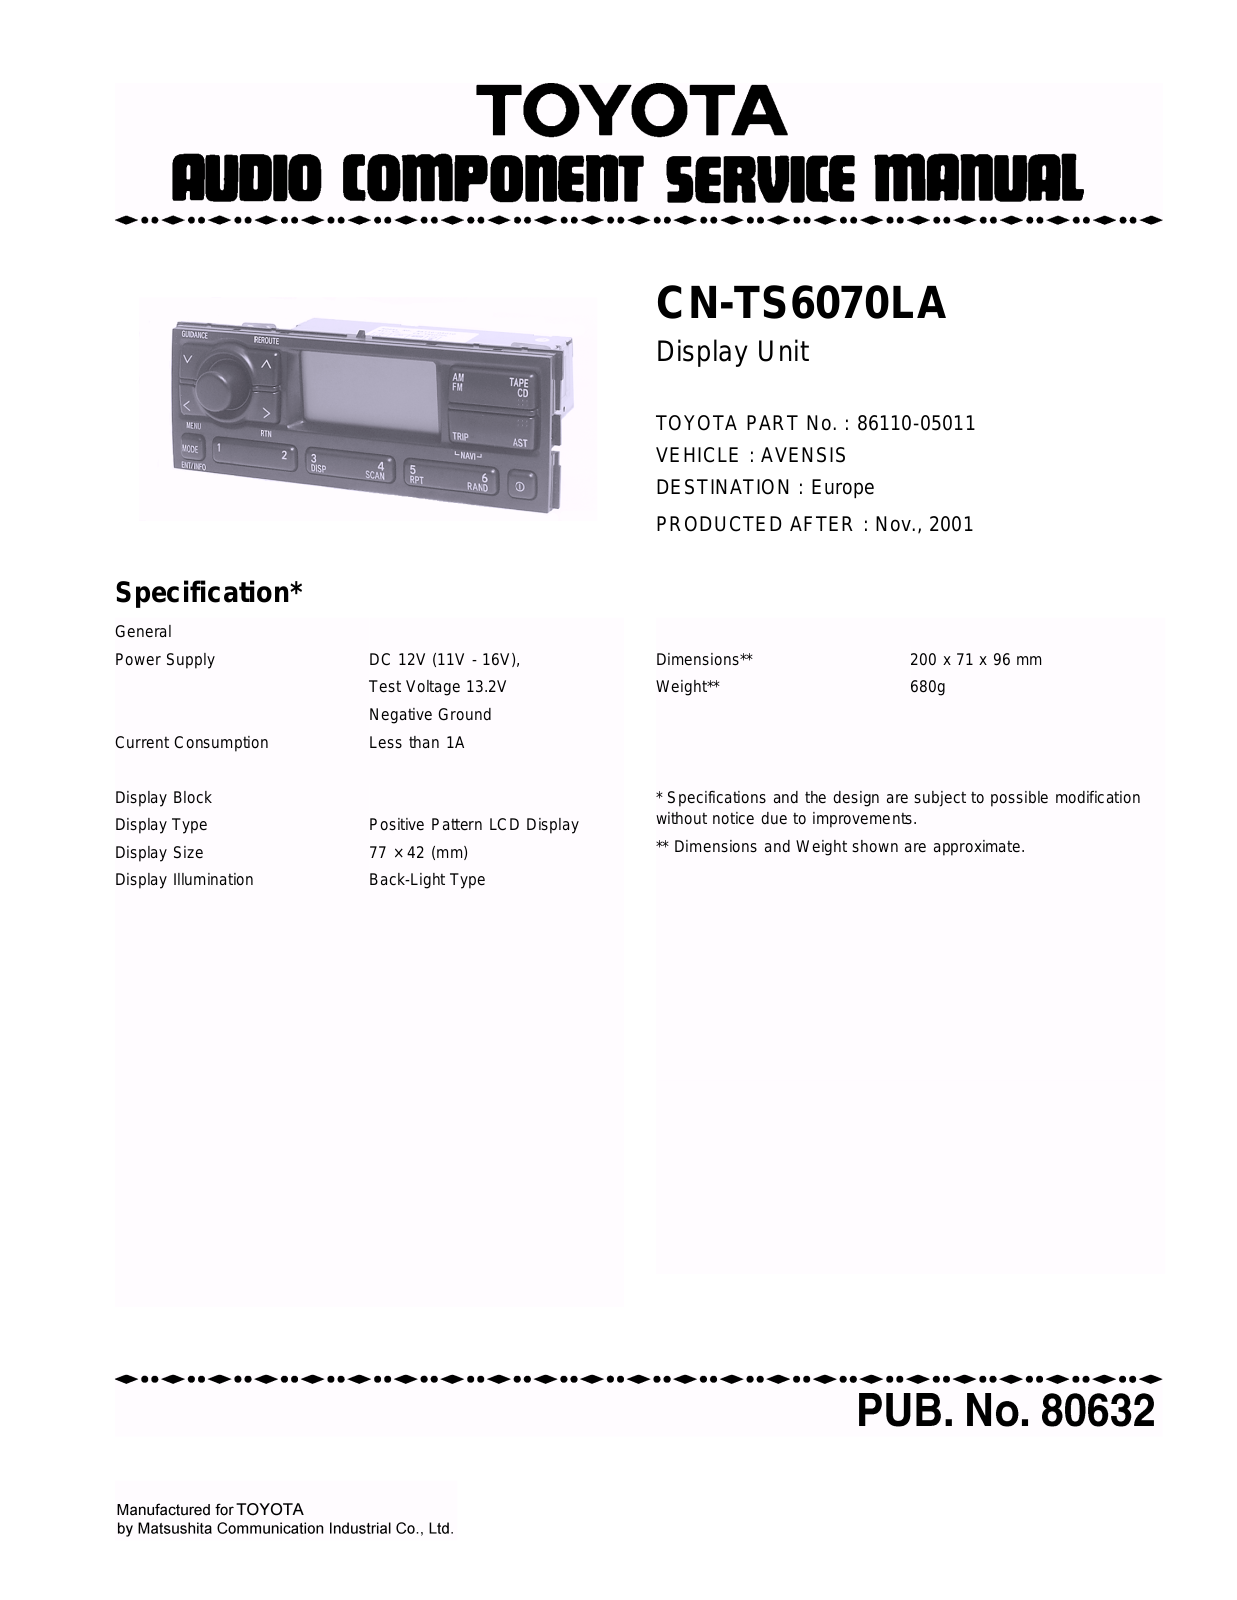 Toyota CN-TS6070LA Service Manual